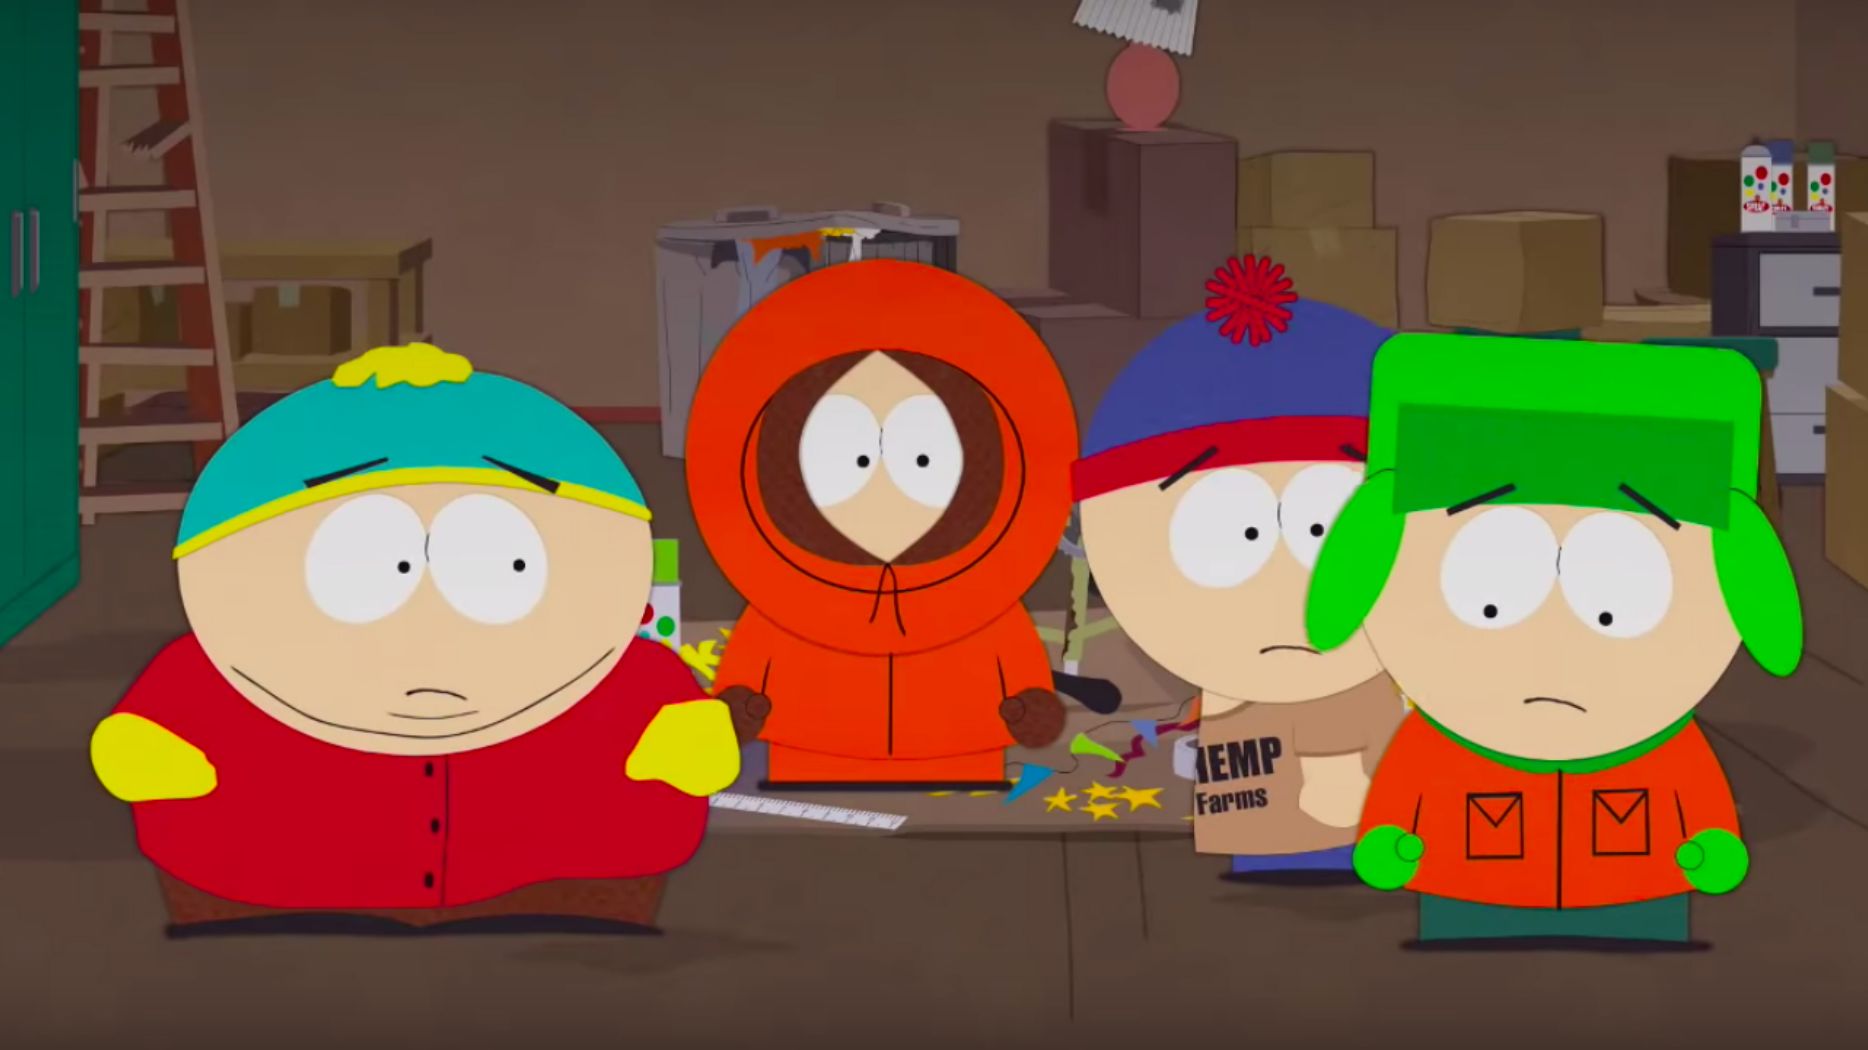 South Park Season 26 Sets Premiere Date on Comedy Central